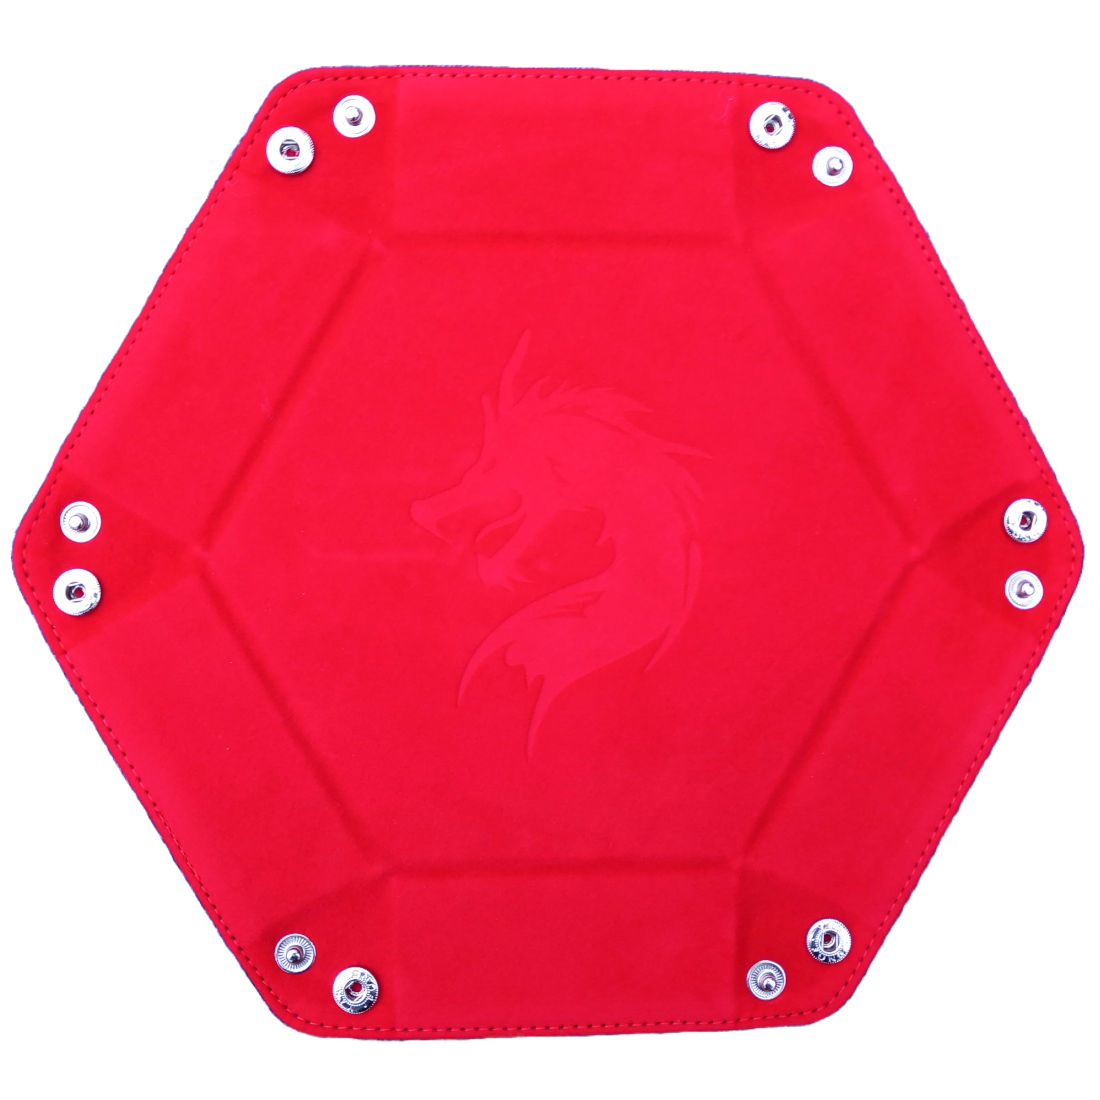 Dragon Dice Tray Folding Hexagon red